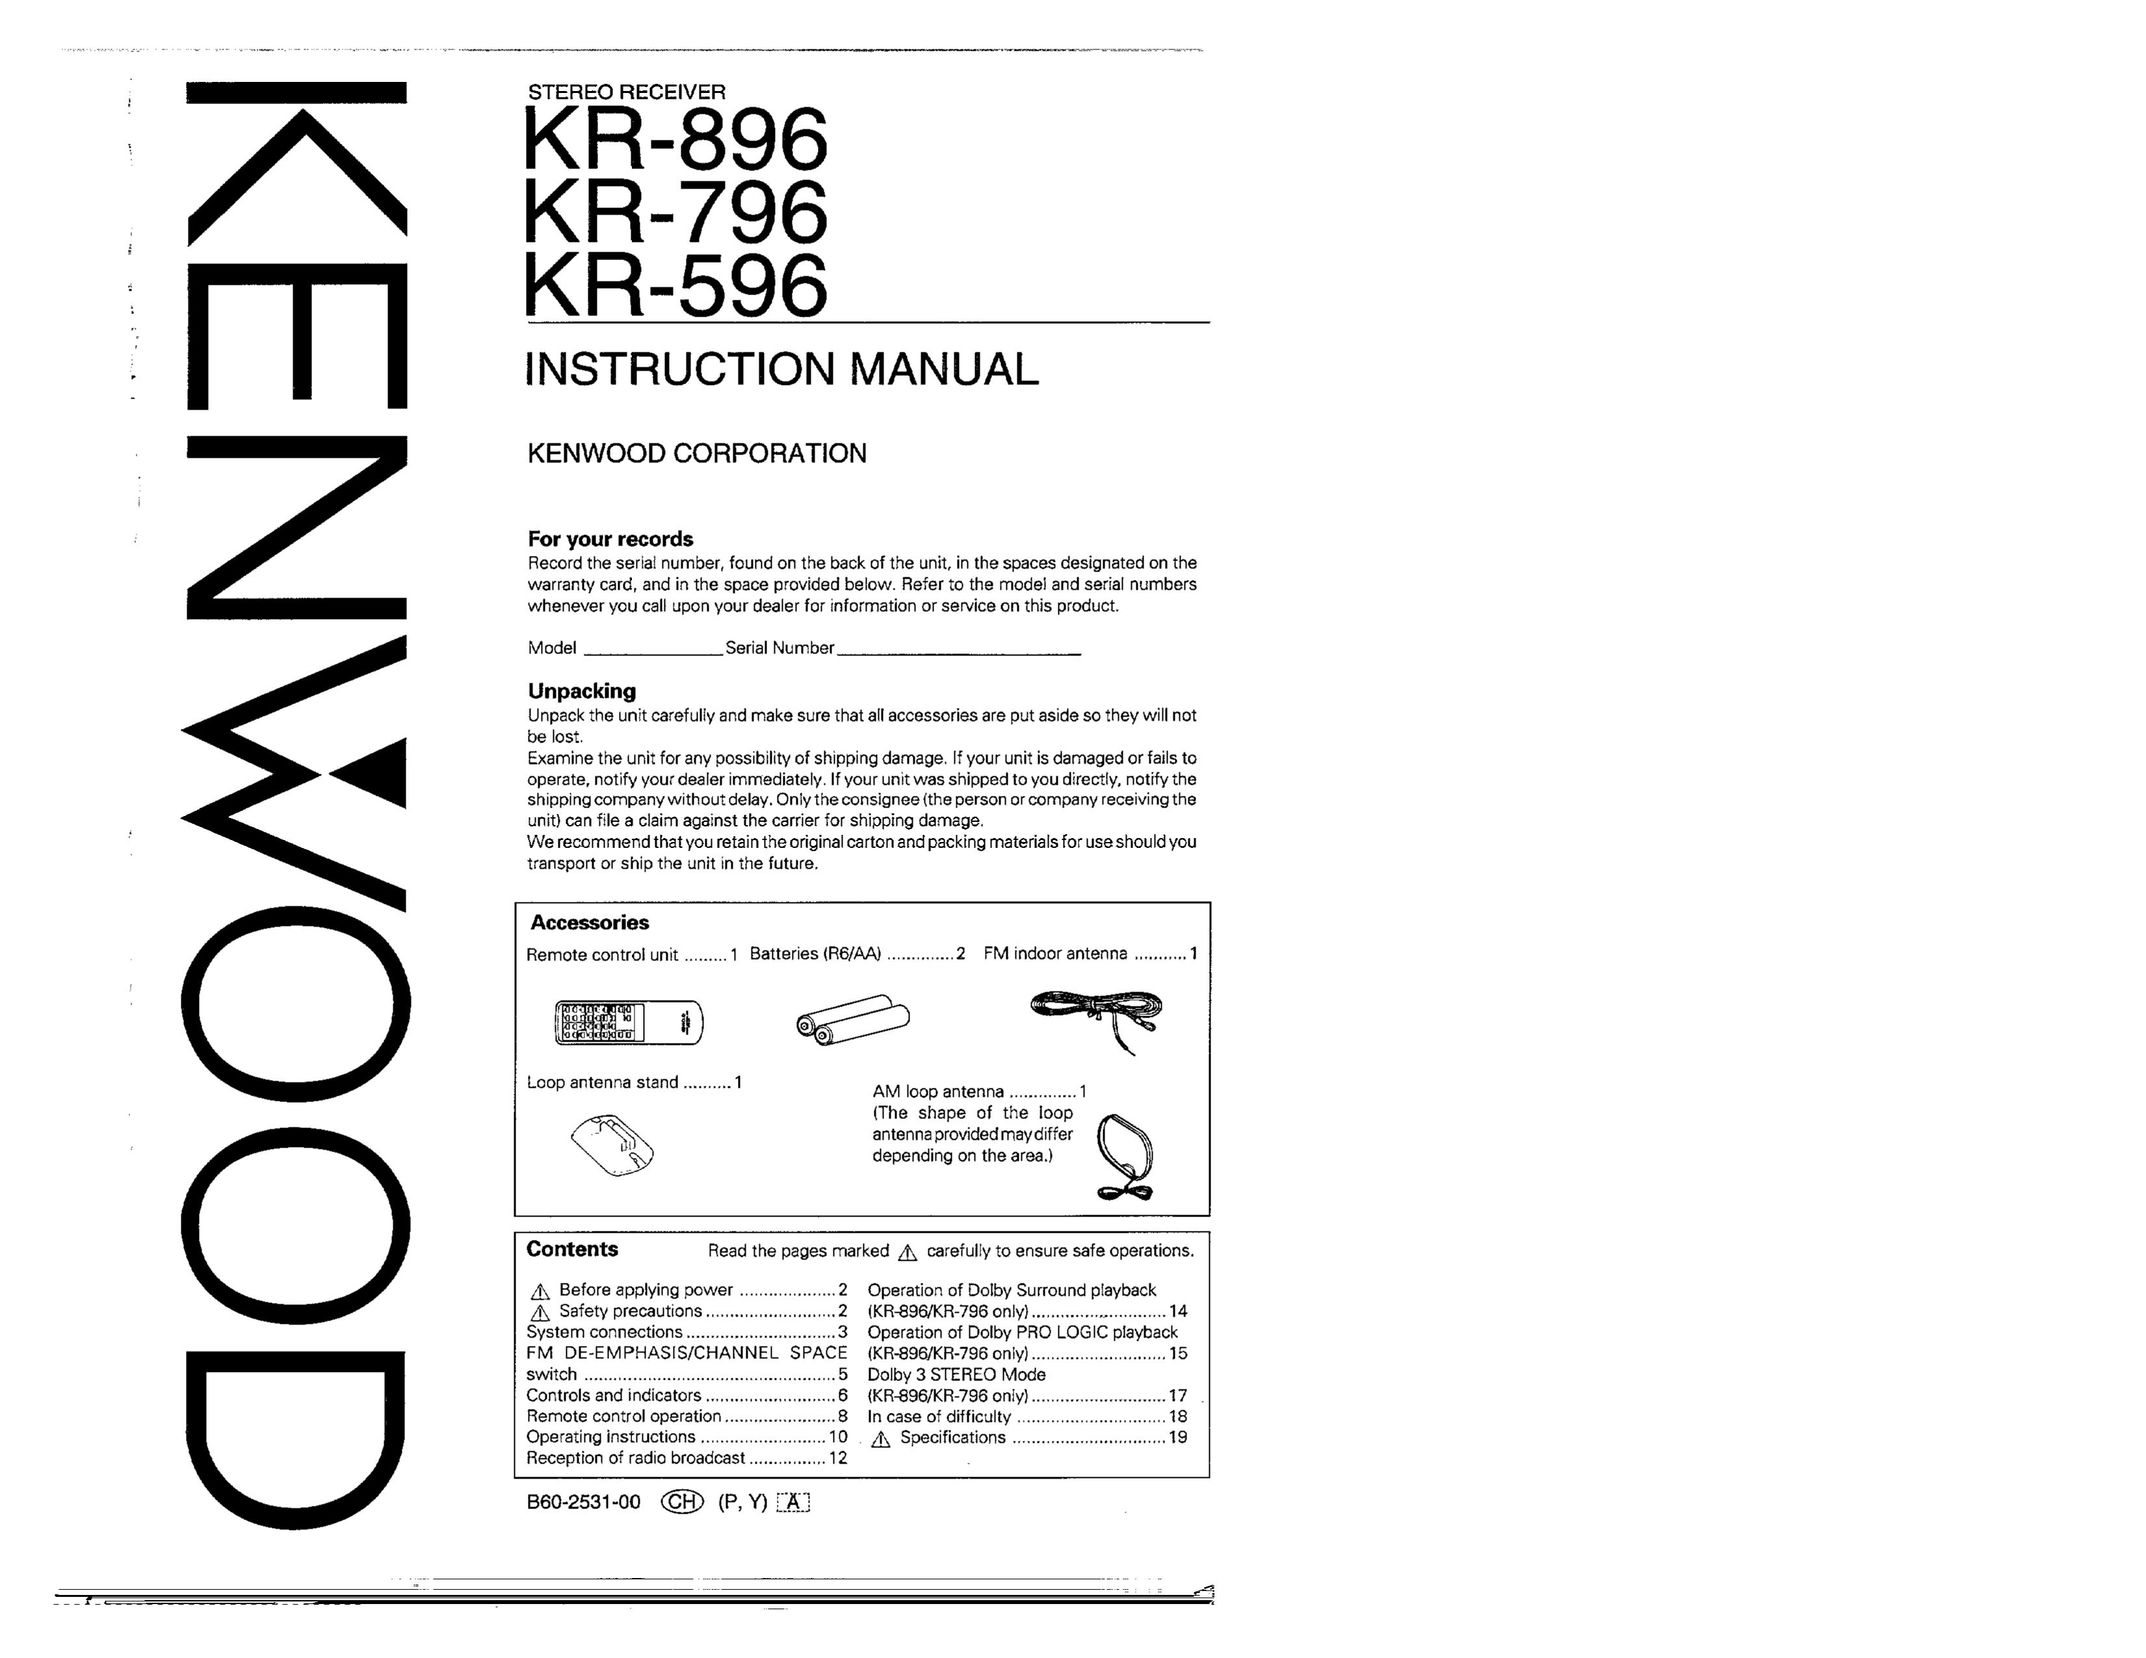 Kenwood KR-896 Stereo Receiver User Manual